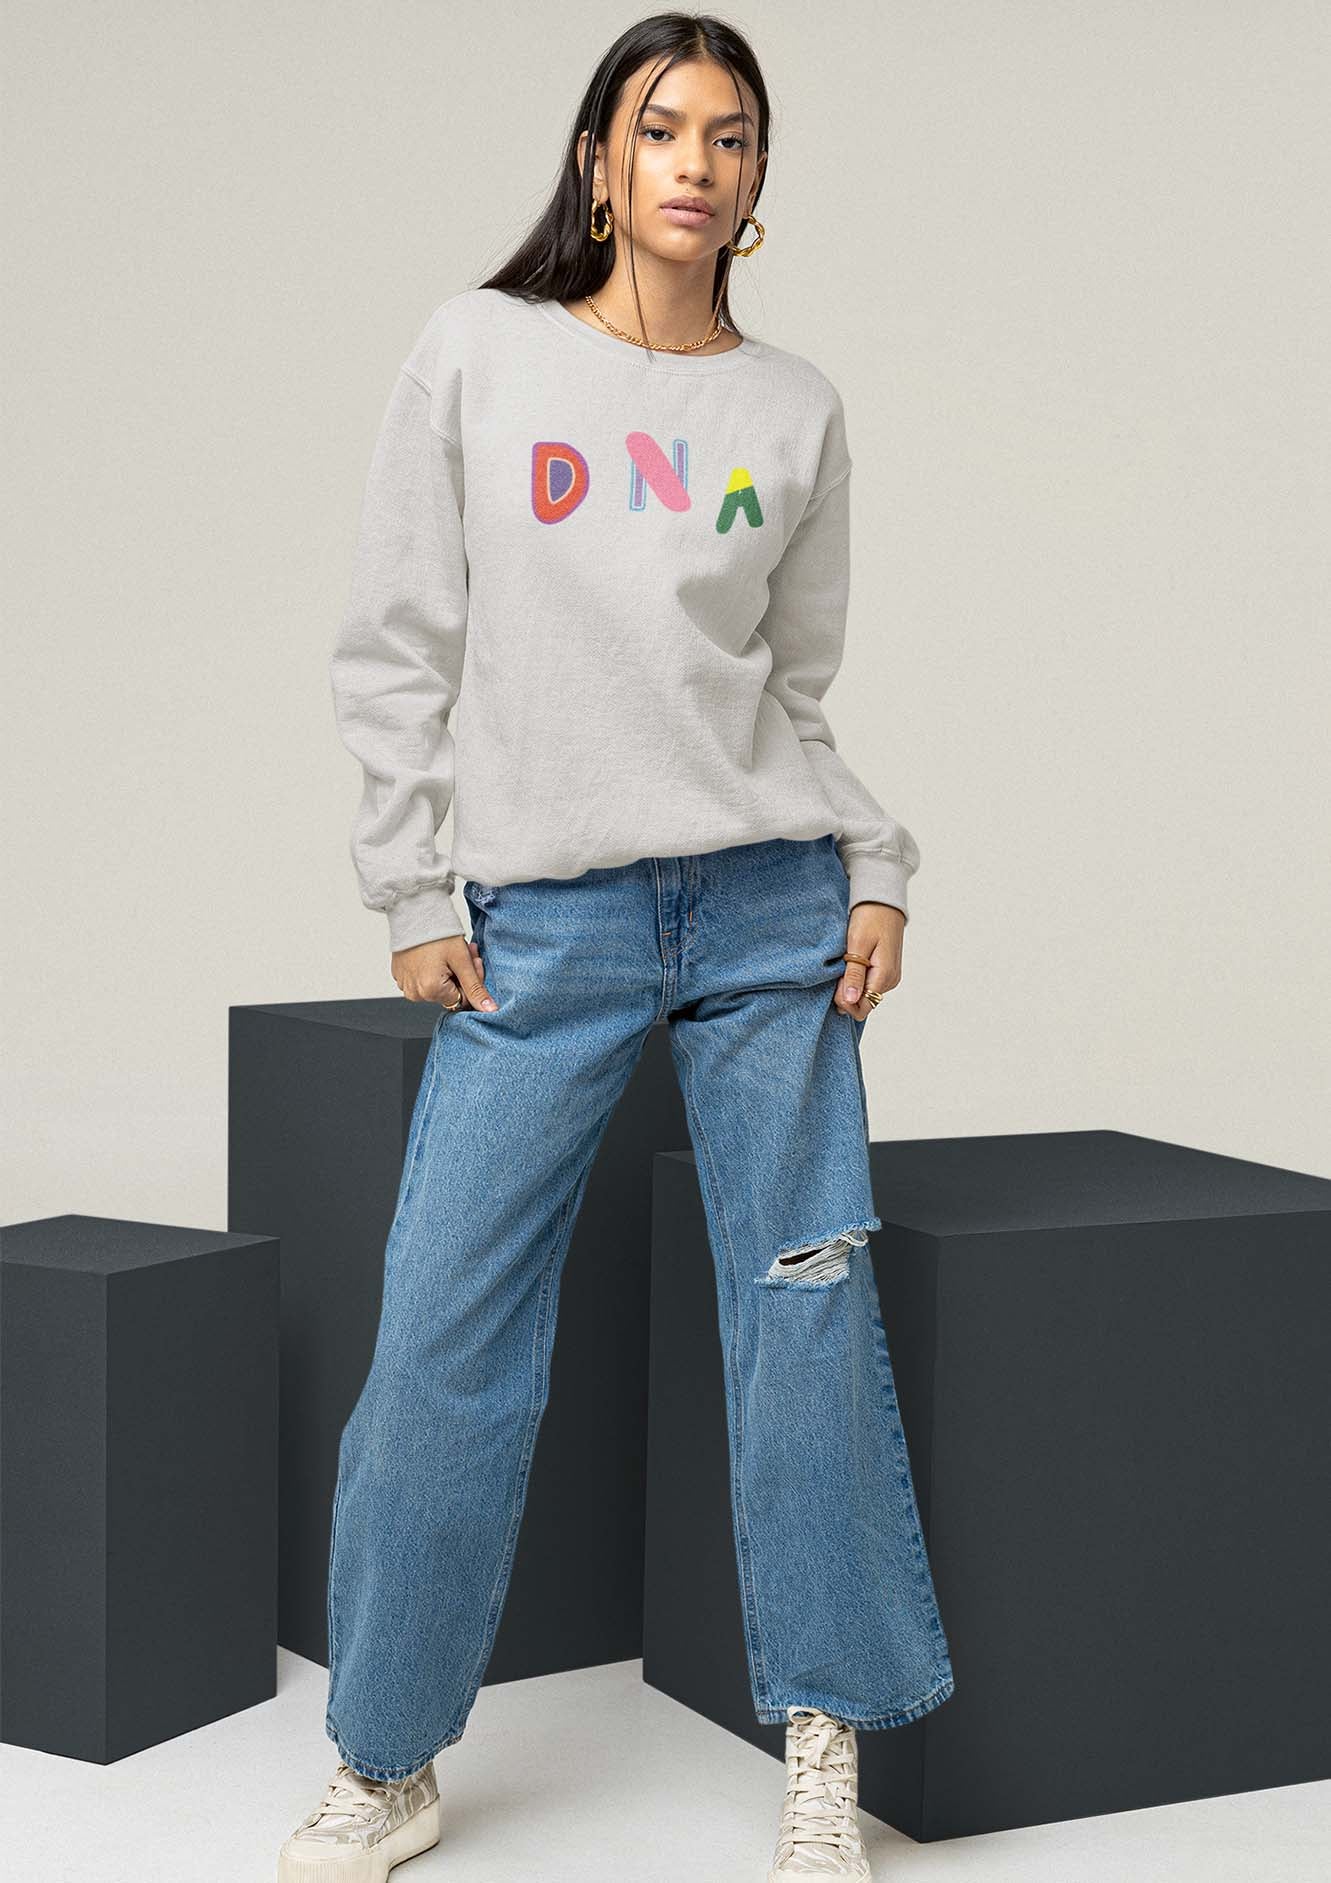 BTS -  Dna V Printed Unisex Sweatshirt